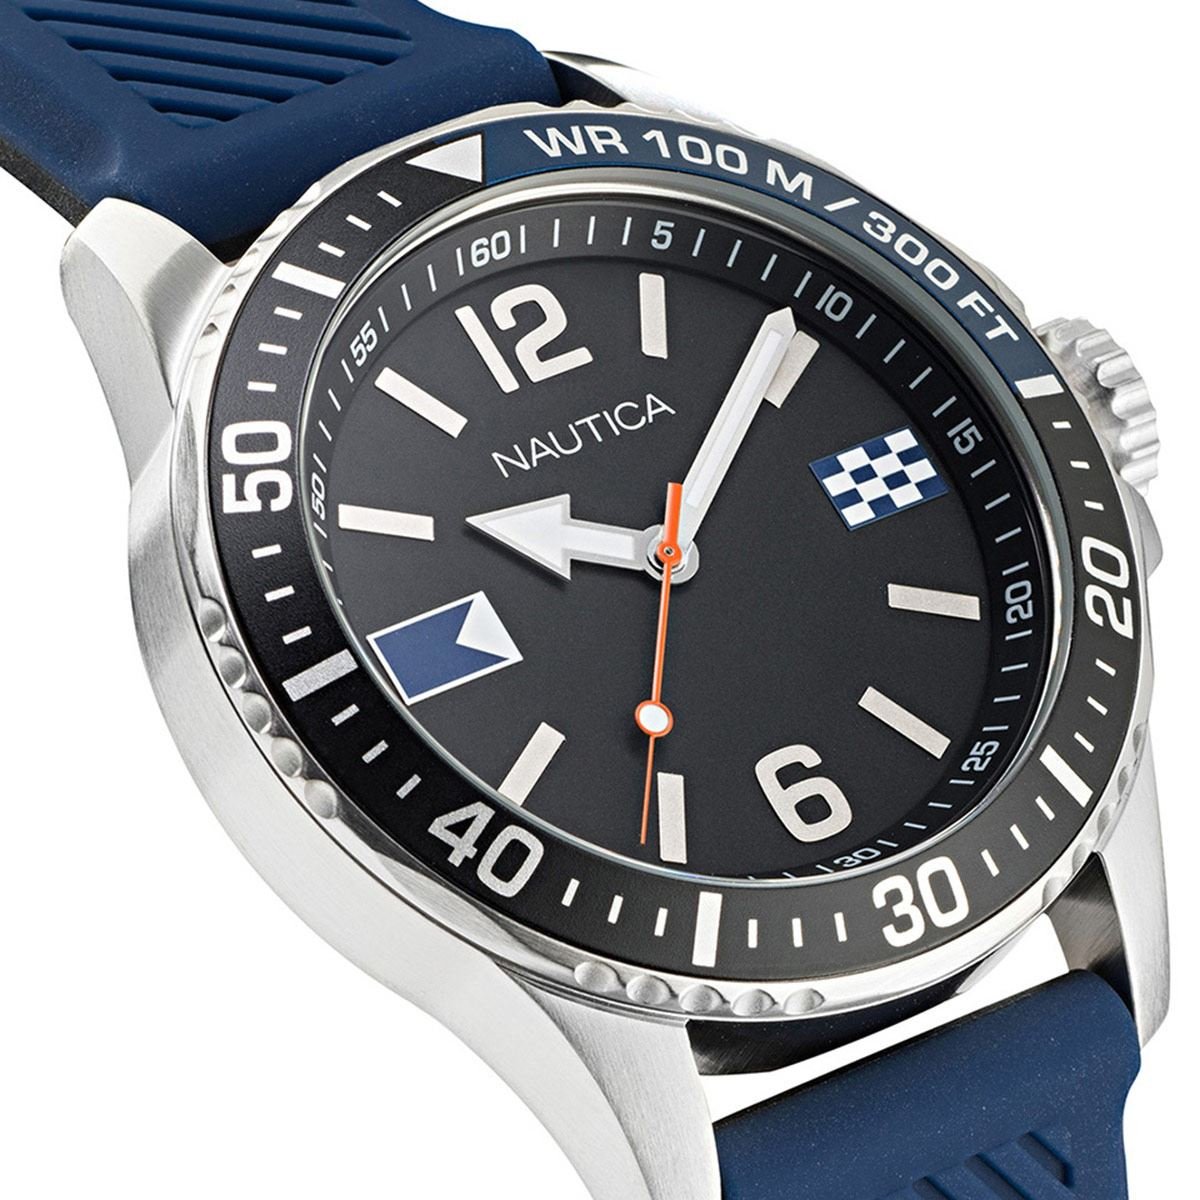 Reloj Nautica Azul Navy NAPFRB920 Para Caballero